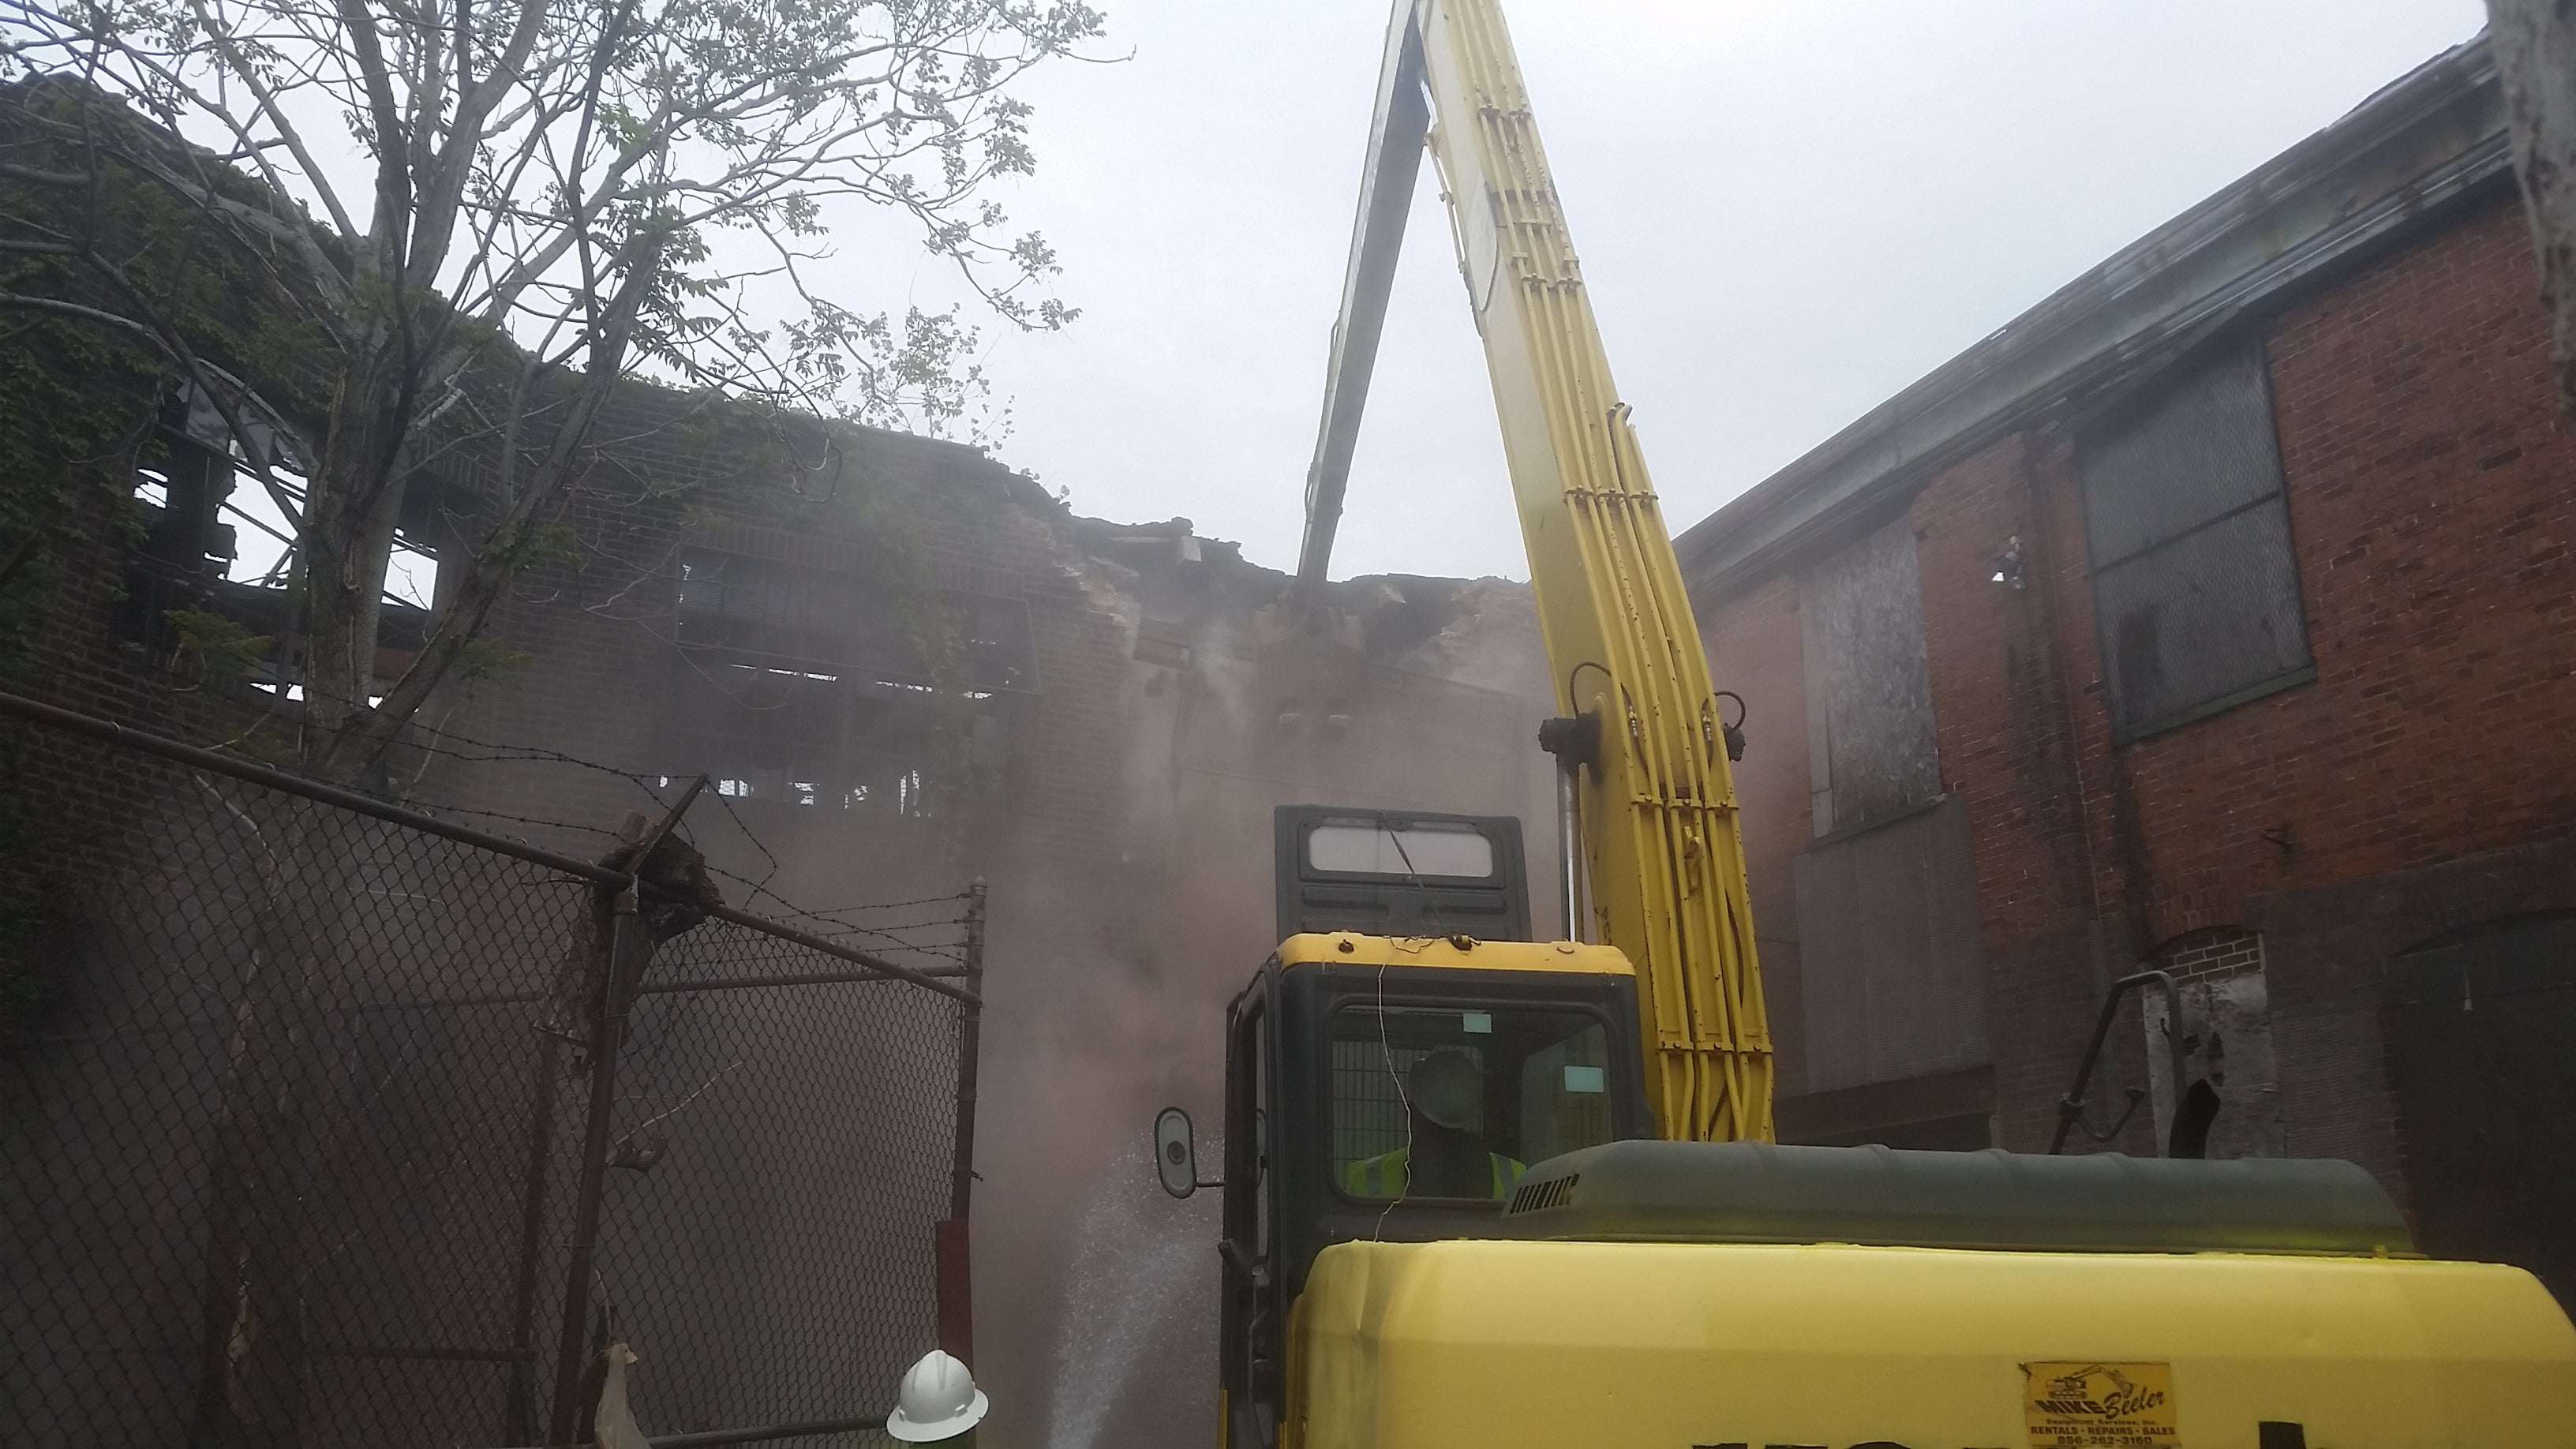  Demolition begins on Hunting Park building Wednesday. (Tom MacDonald/WHYY) 